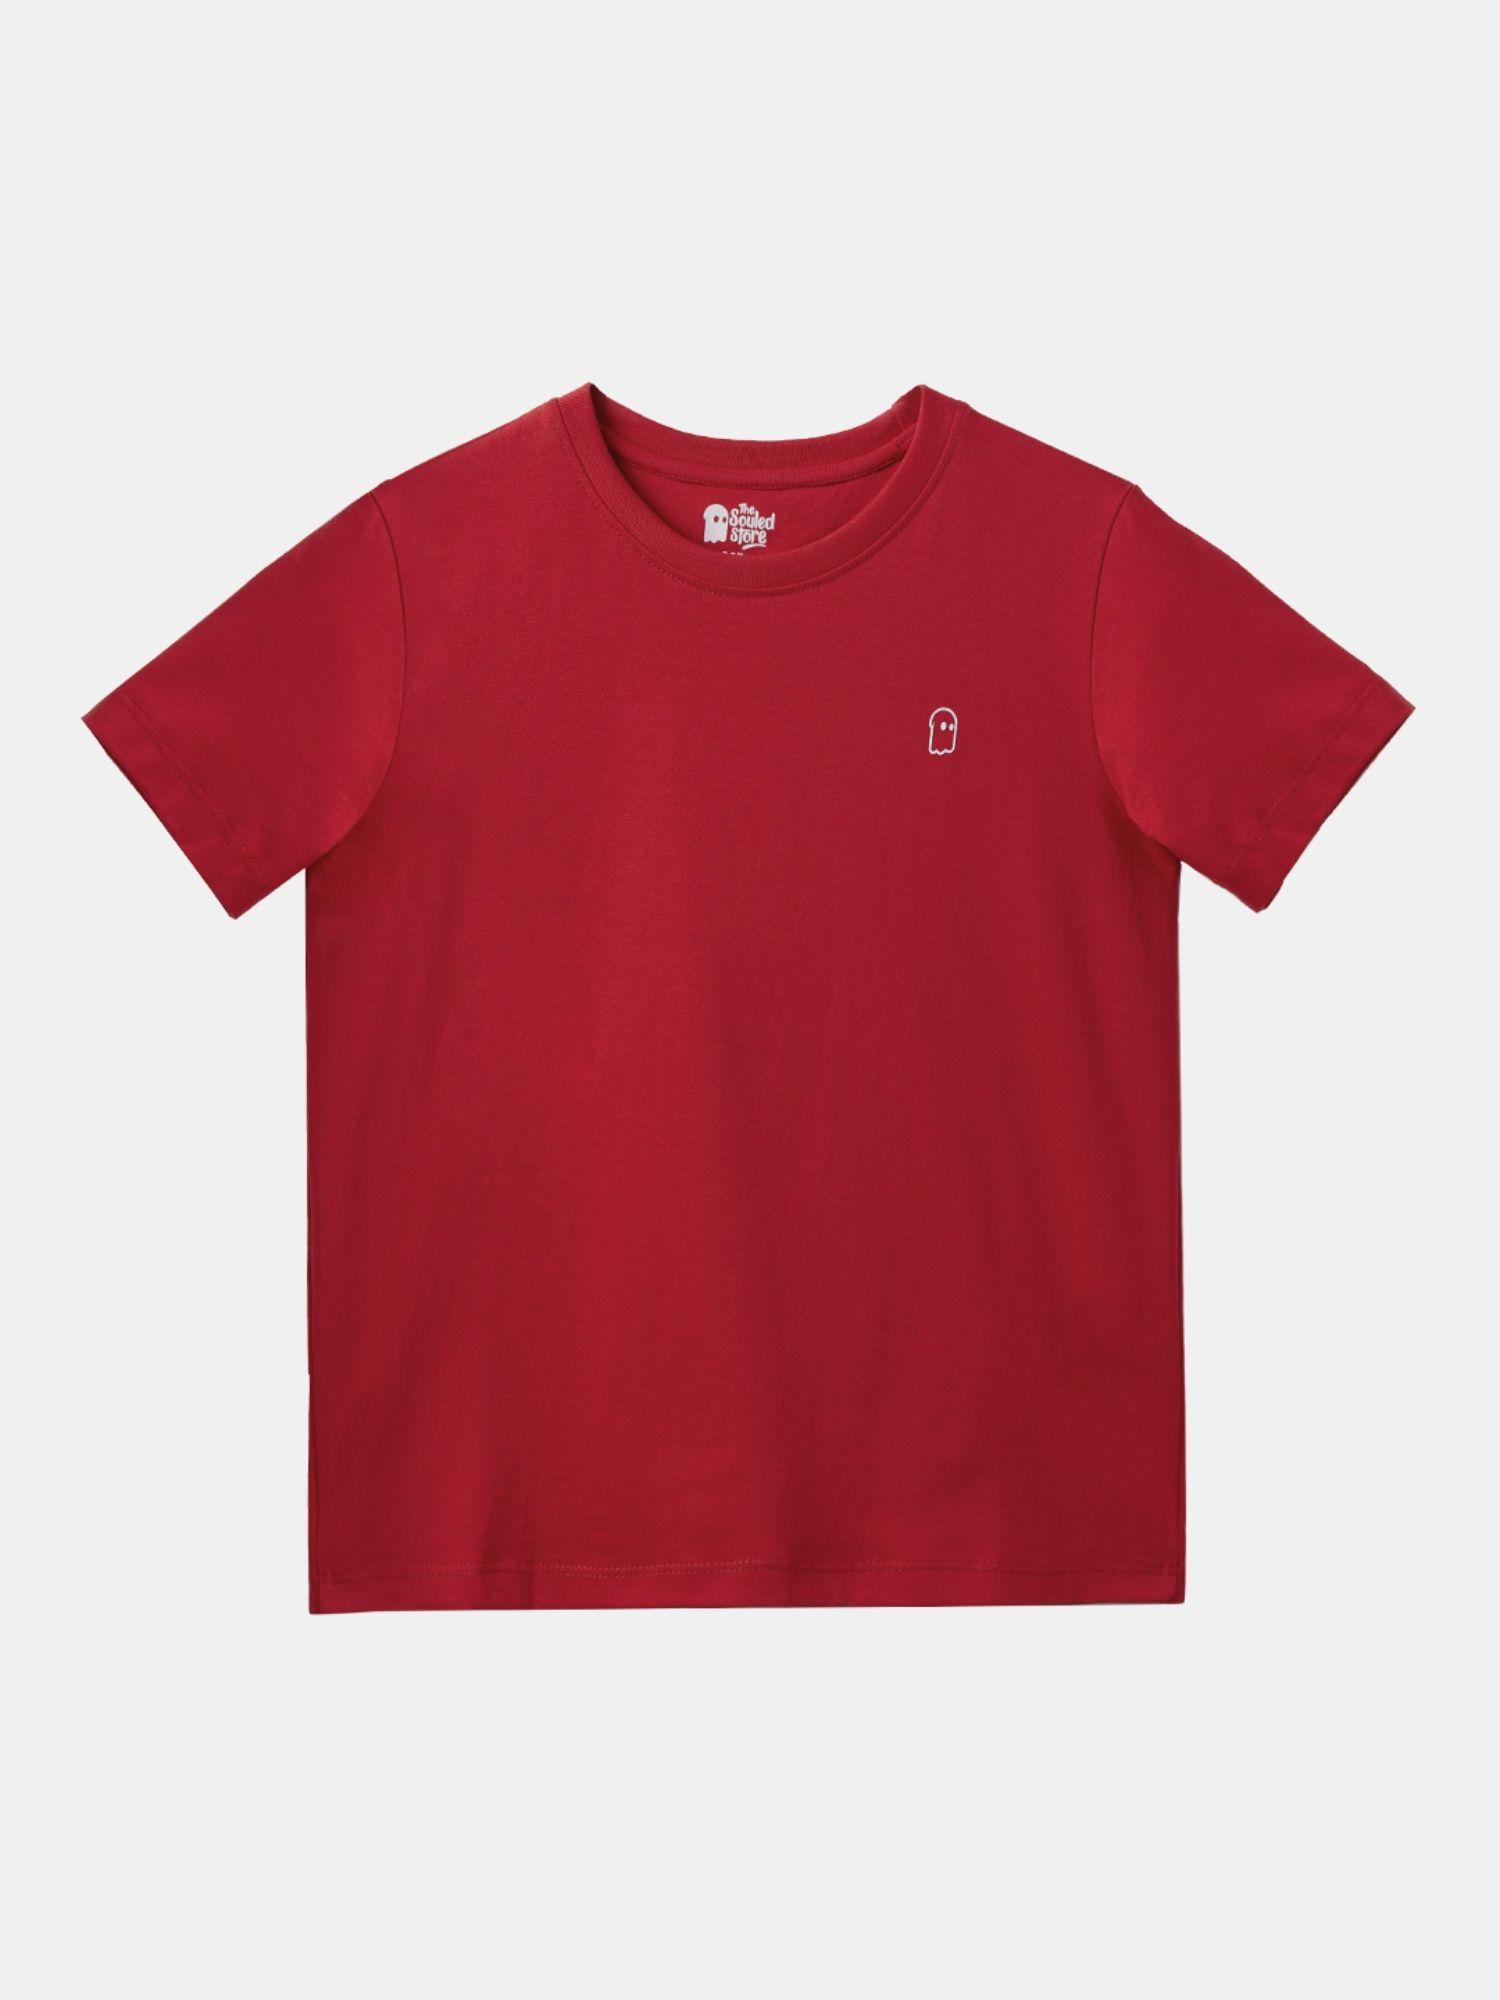 original solids classic red cotton t-shirt for boys